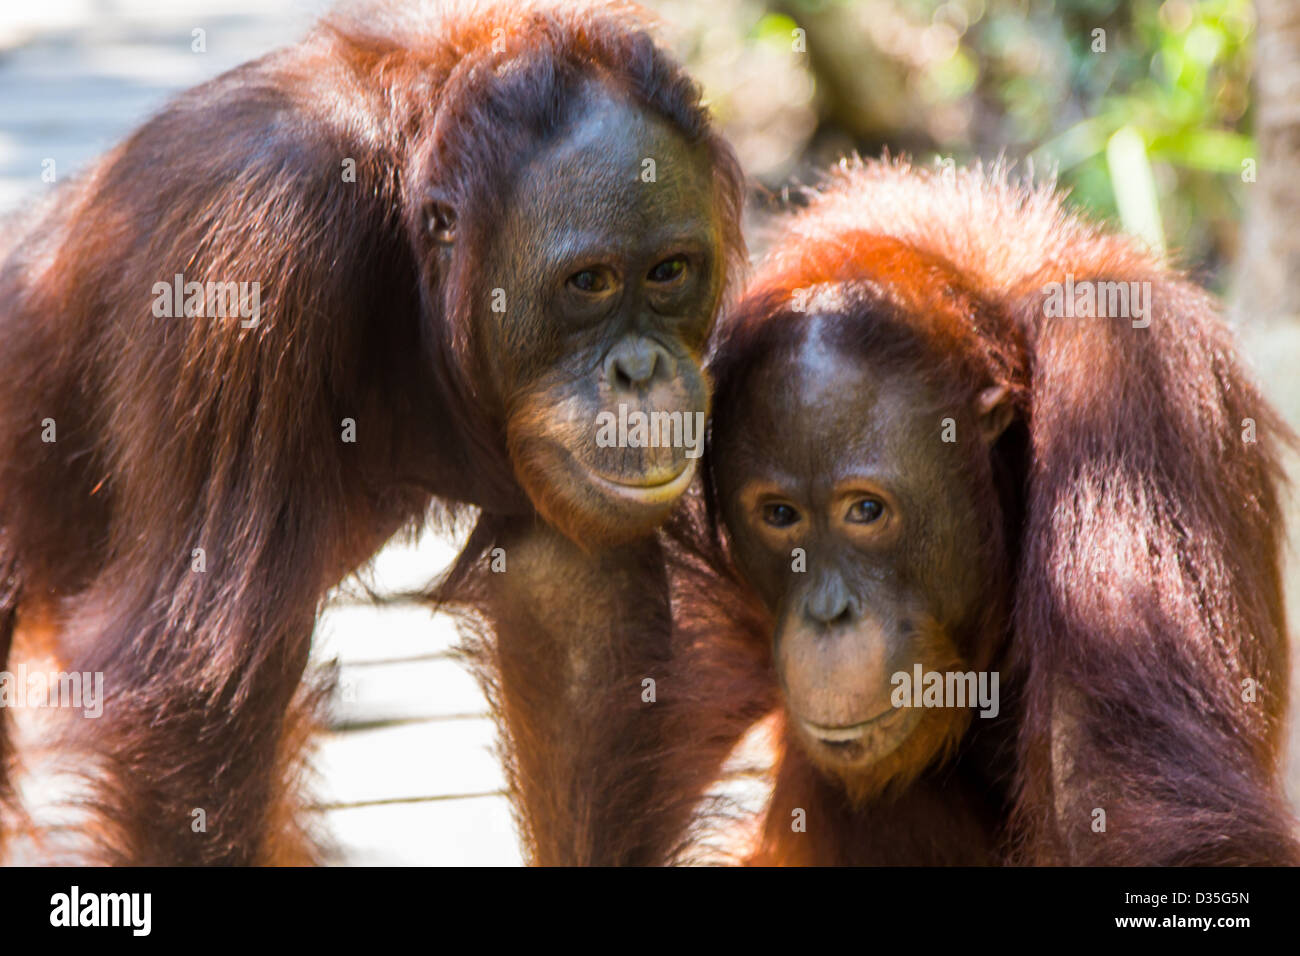 Orangutan, Borneo Stock Photo